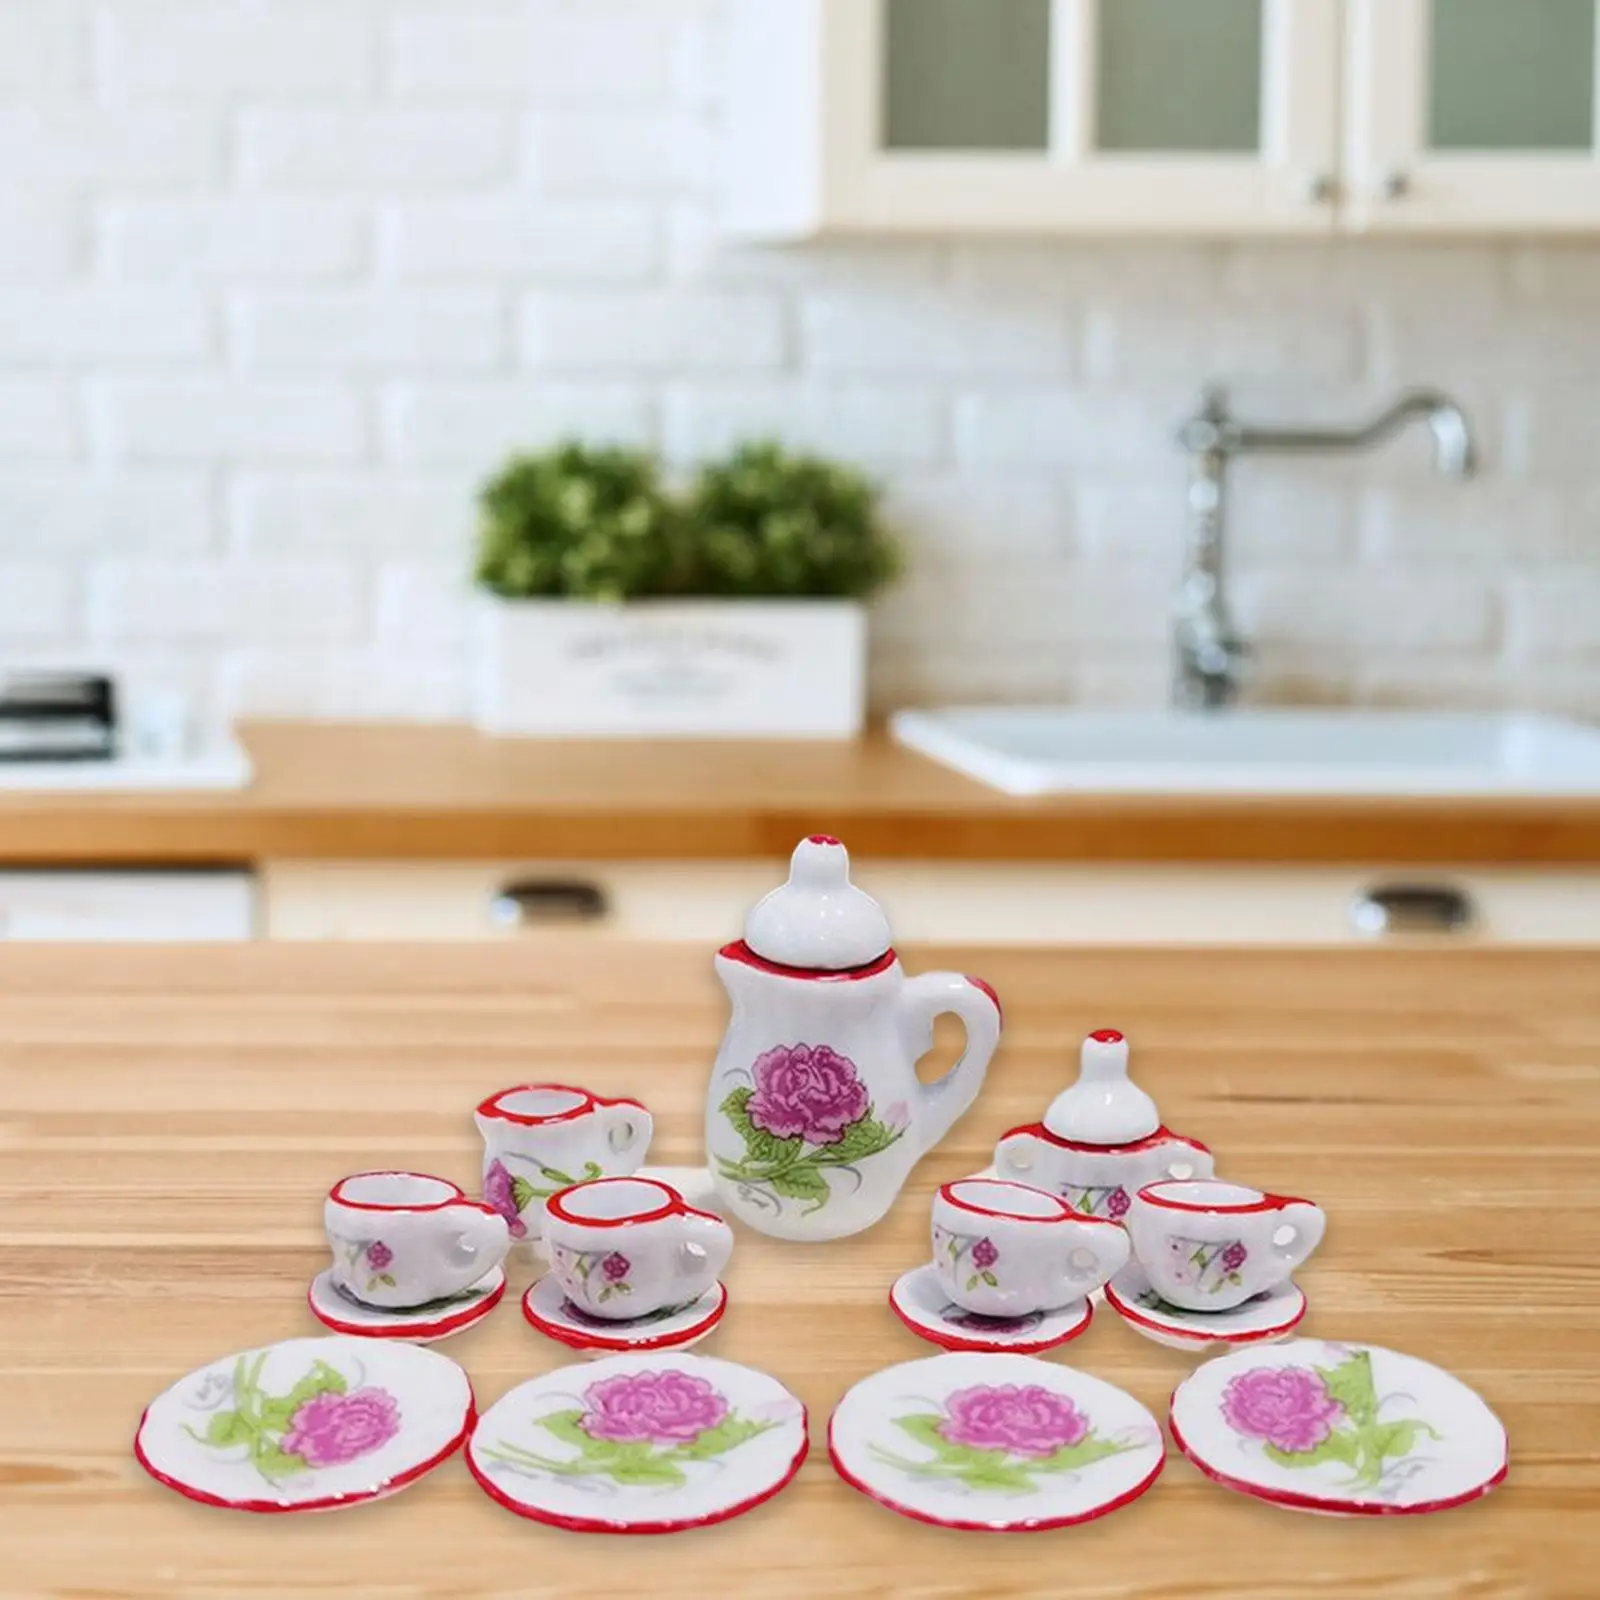 1/12 Dollhouse Miniature Porcelain Tea Cup Simulation Dining Ware Micro Landscape Home Furniture Mini Teapot Cup Plate Ornaments